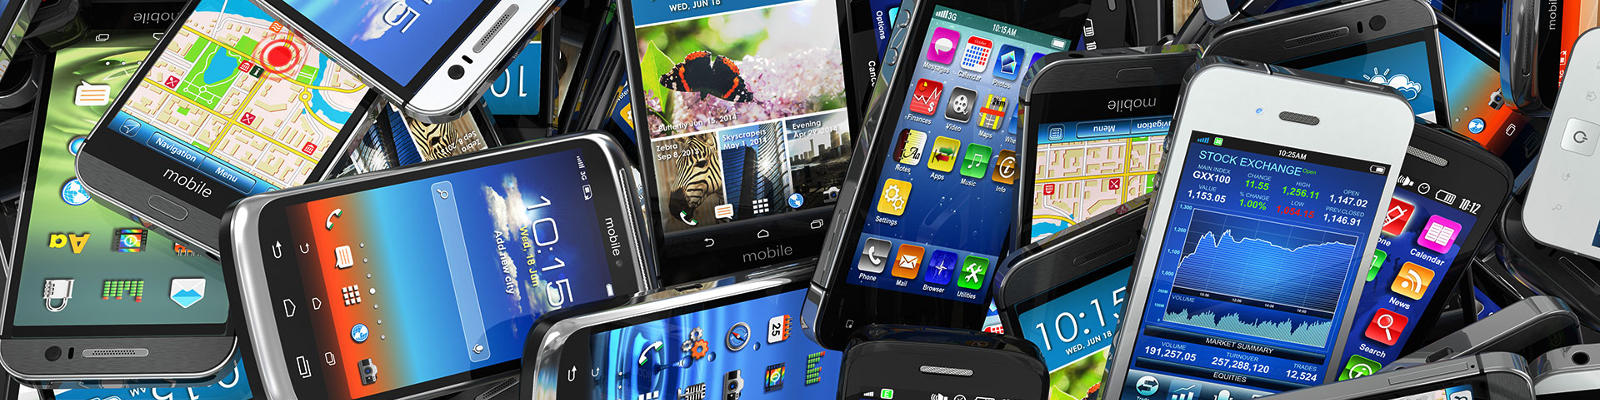 mobile-smartphones-pile1